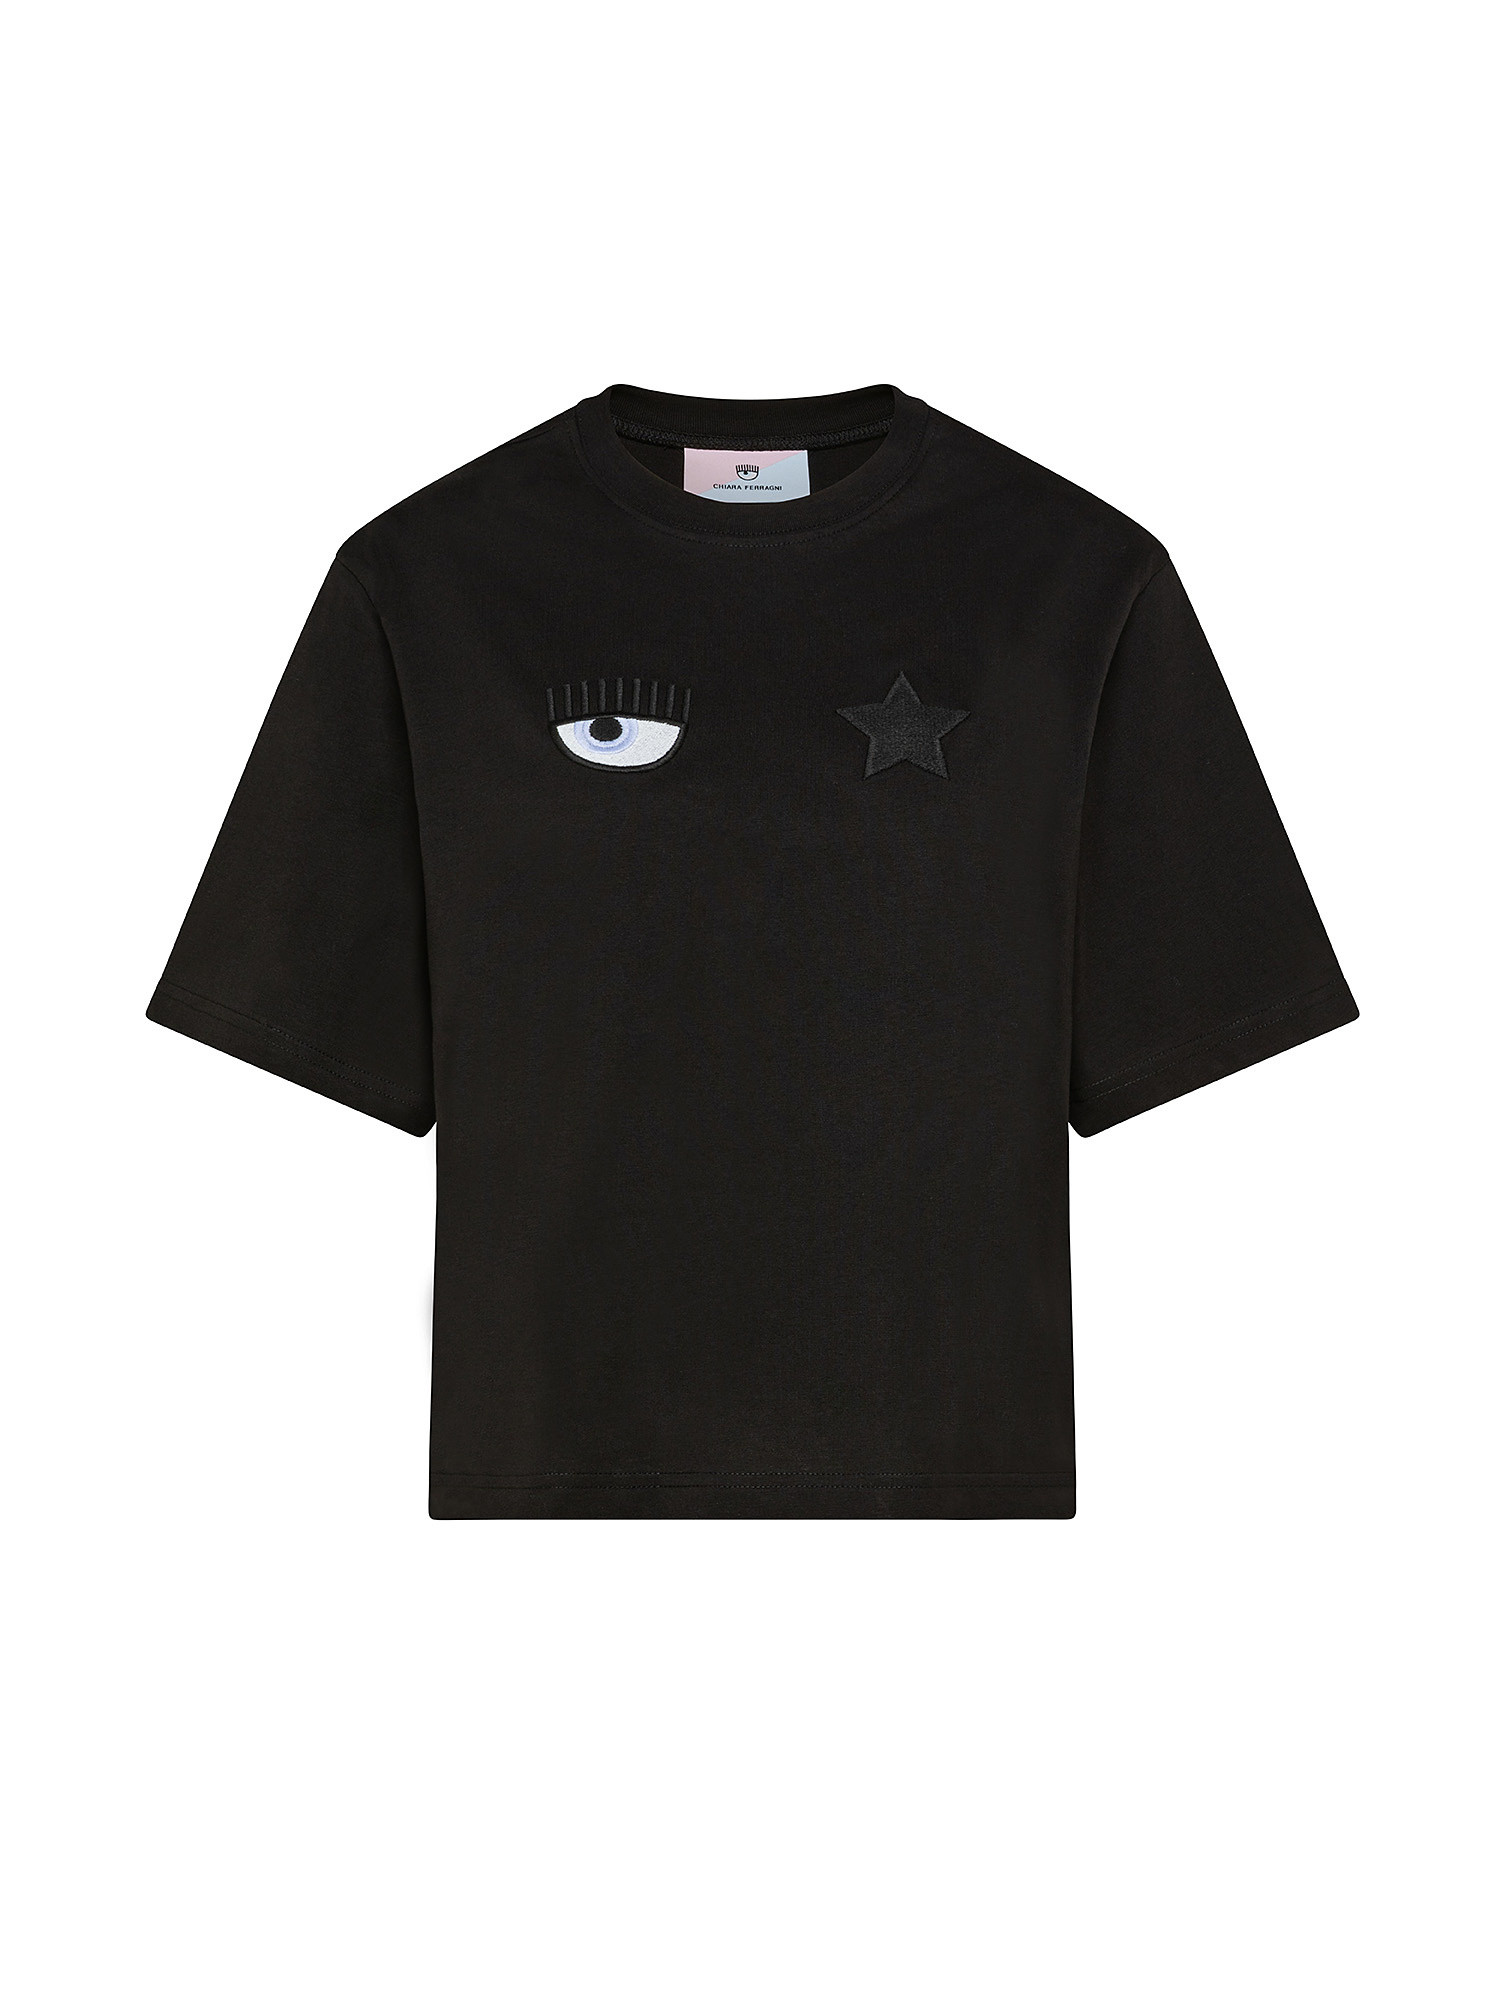 T-shirt Eye Star, Nero, large image number 0